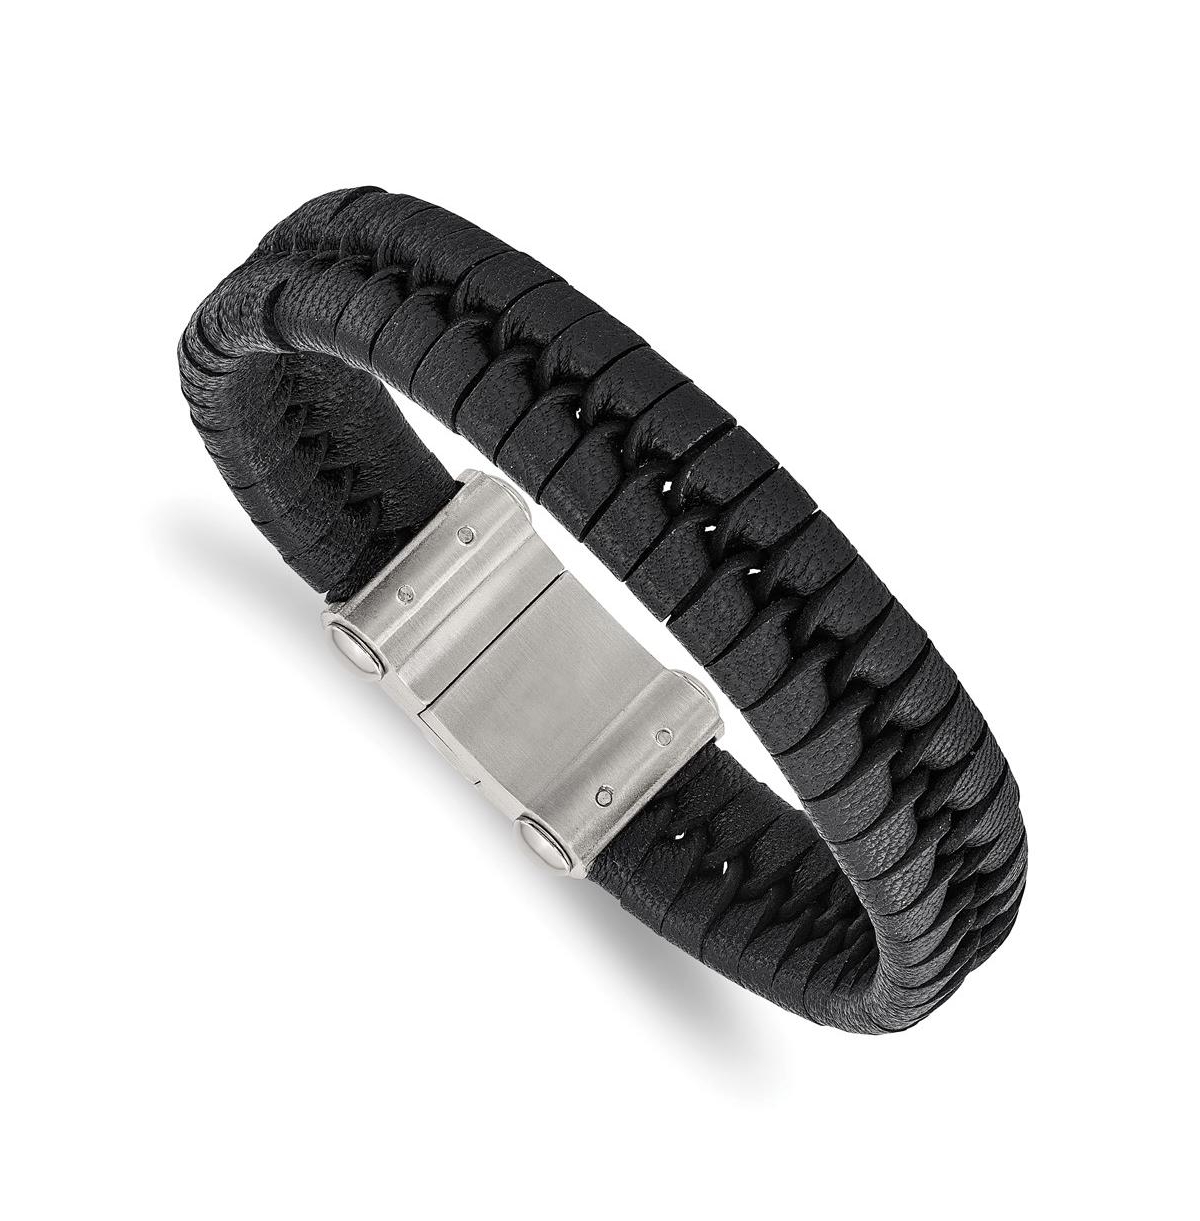 Stainless Steel Brushed Black Leather Bracelet